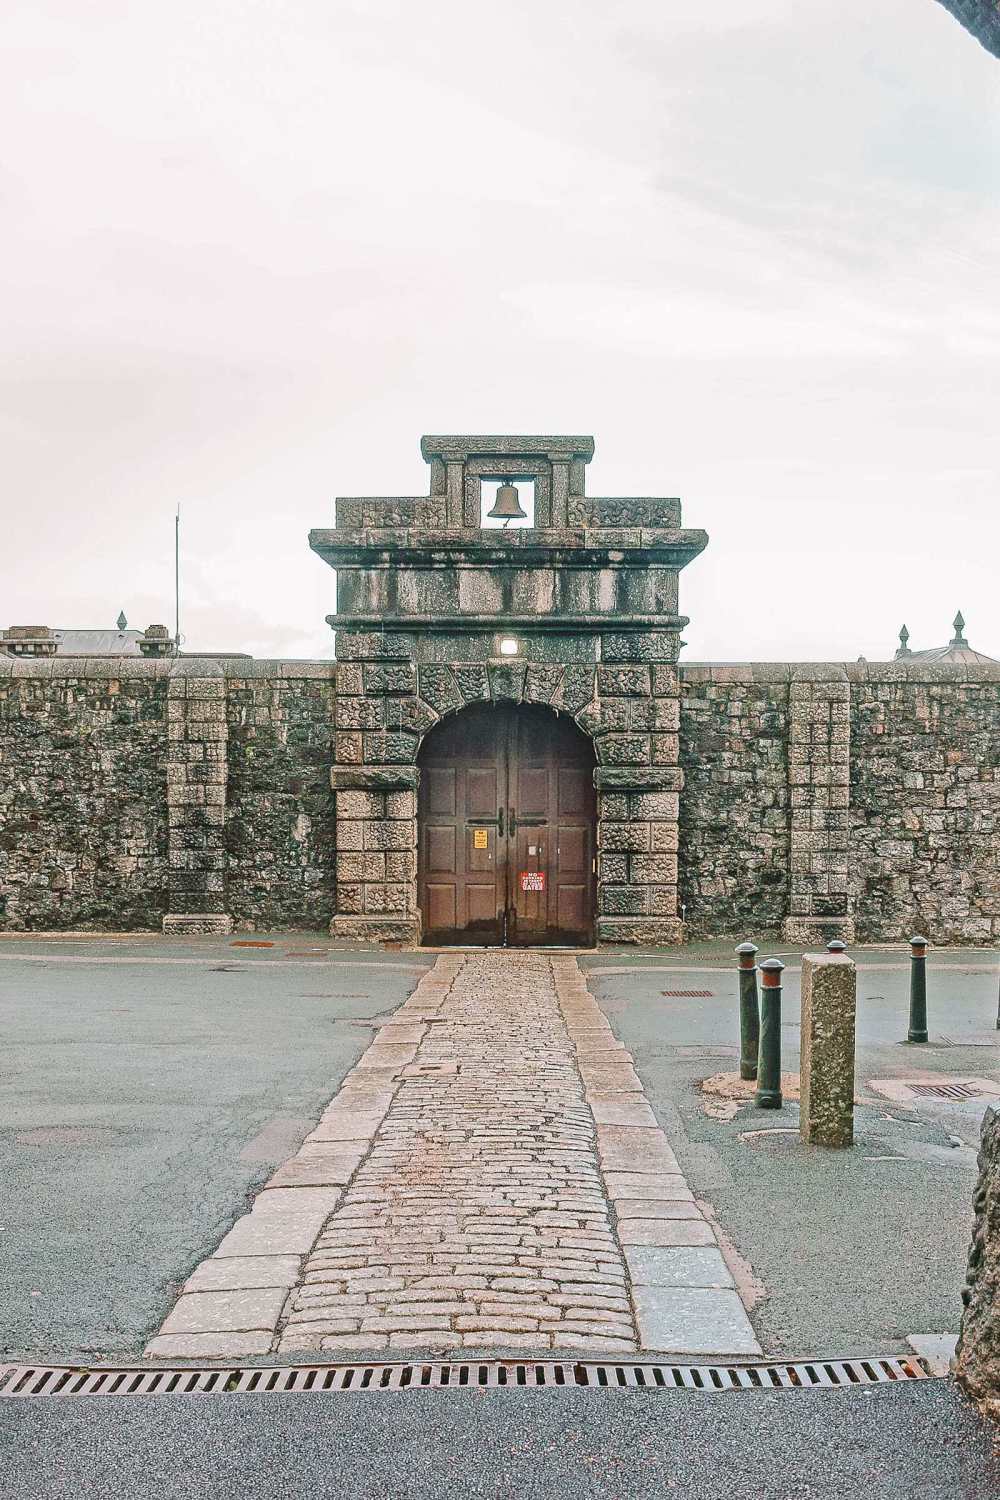 Historic Devon Prison